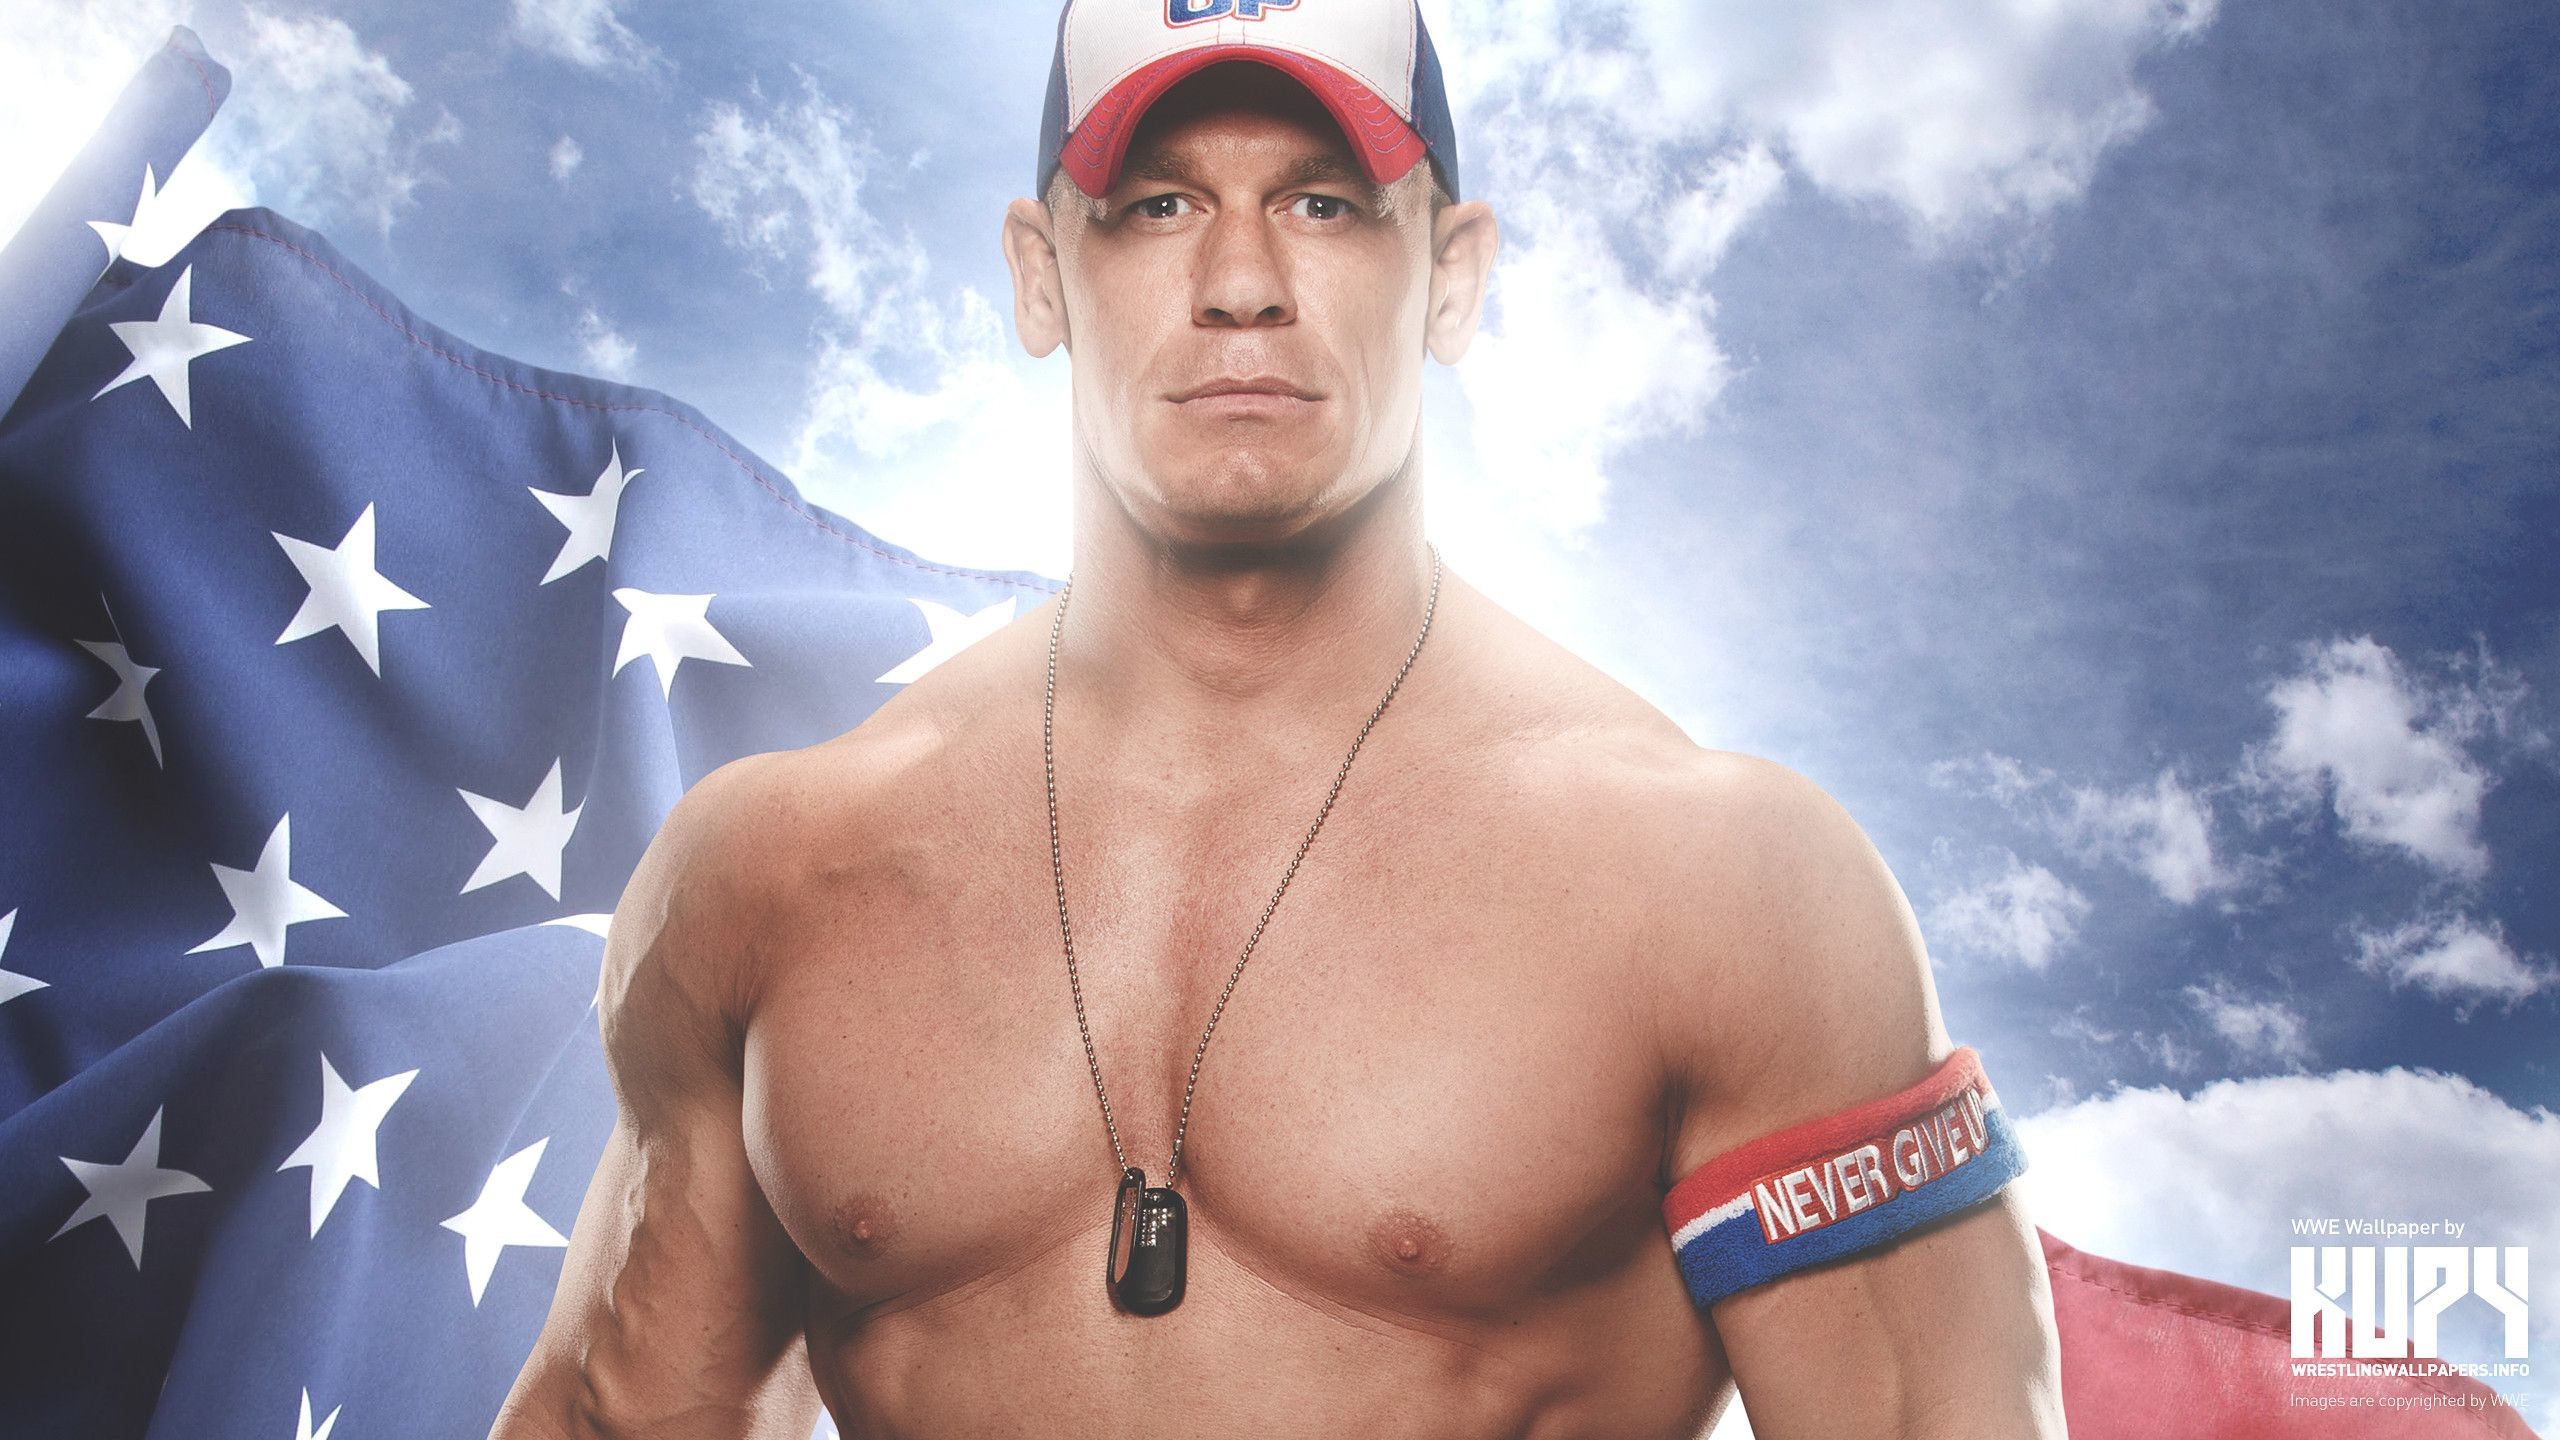 Download John Cena Wallpaper 4K Free for Android - John Cena Wallpaper 4K  APK Download - STEPrimo.com